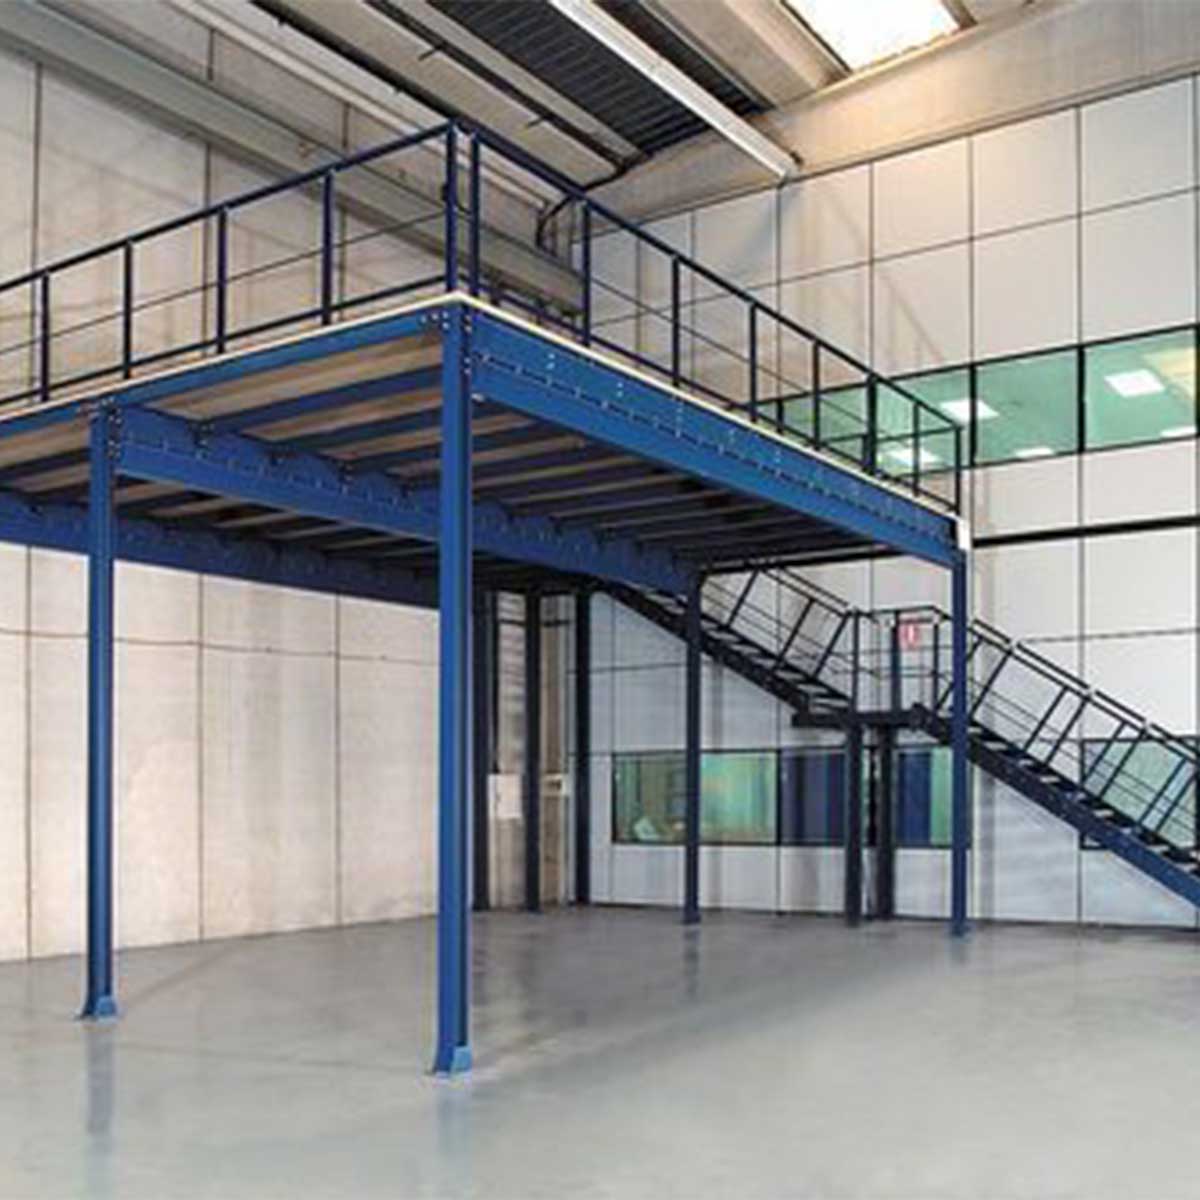 mezzanine storage rack Manufacturers, Suppliers in Mg Road